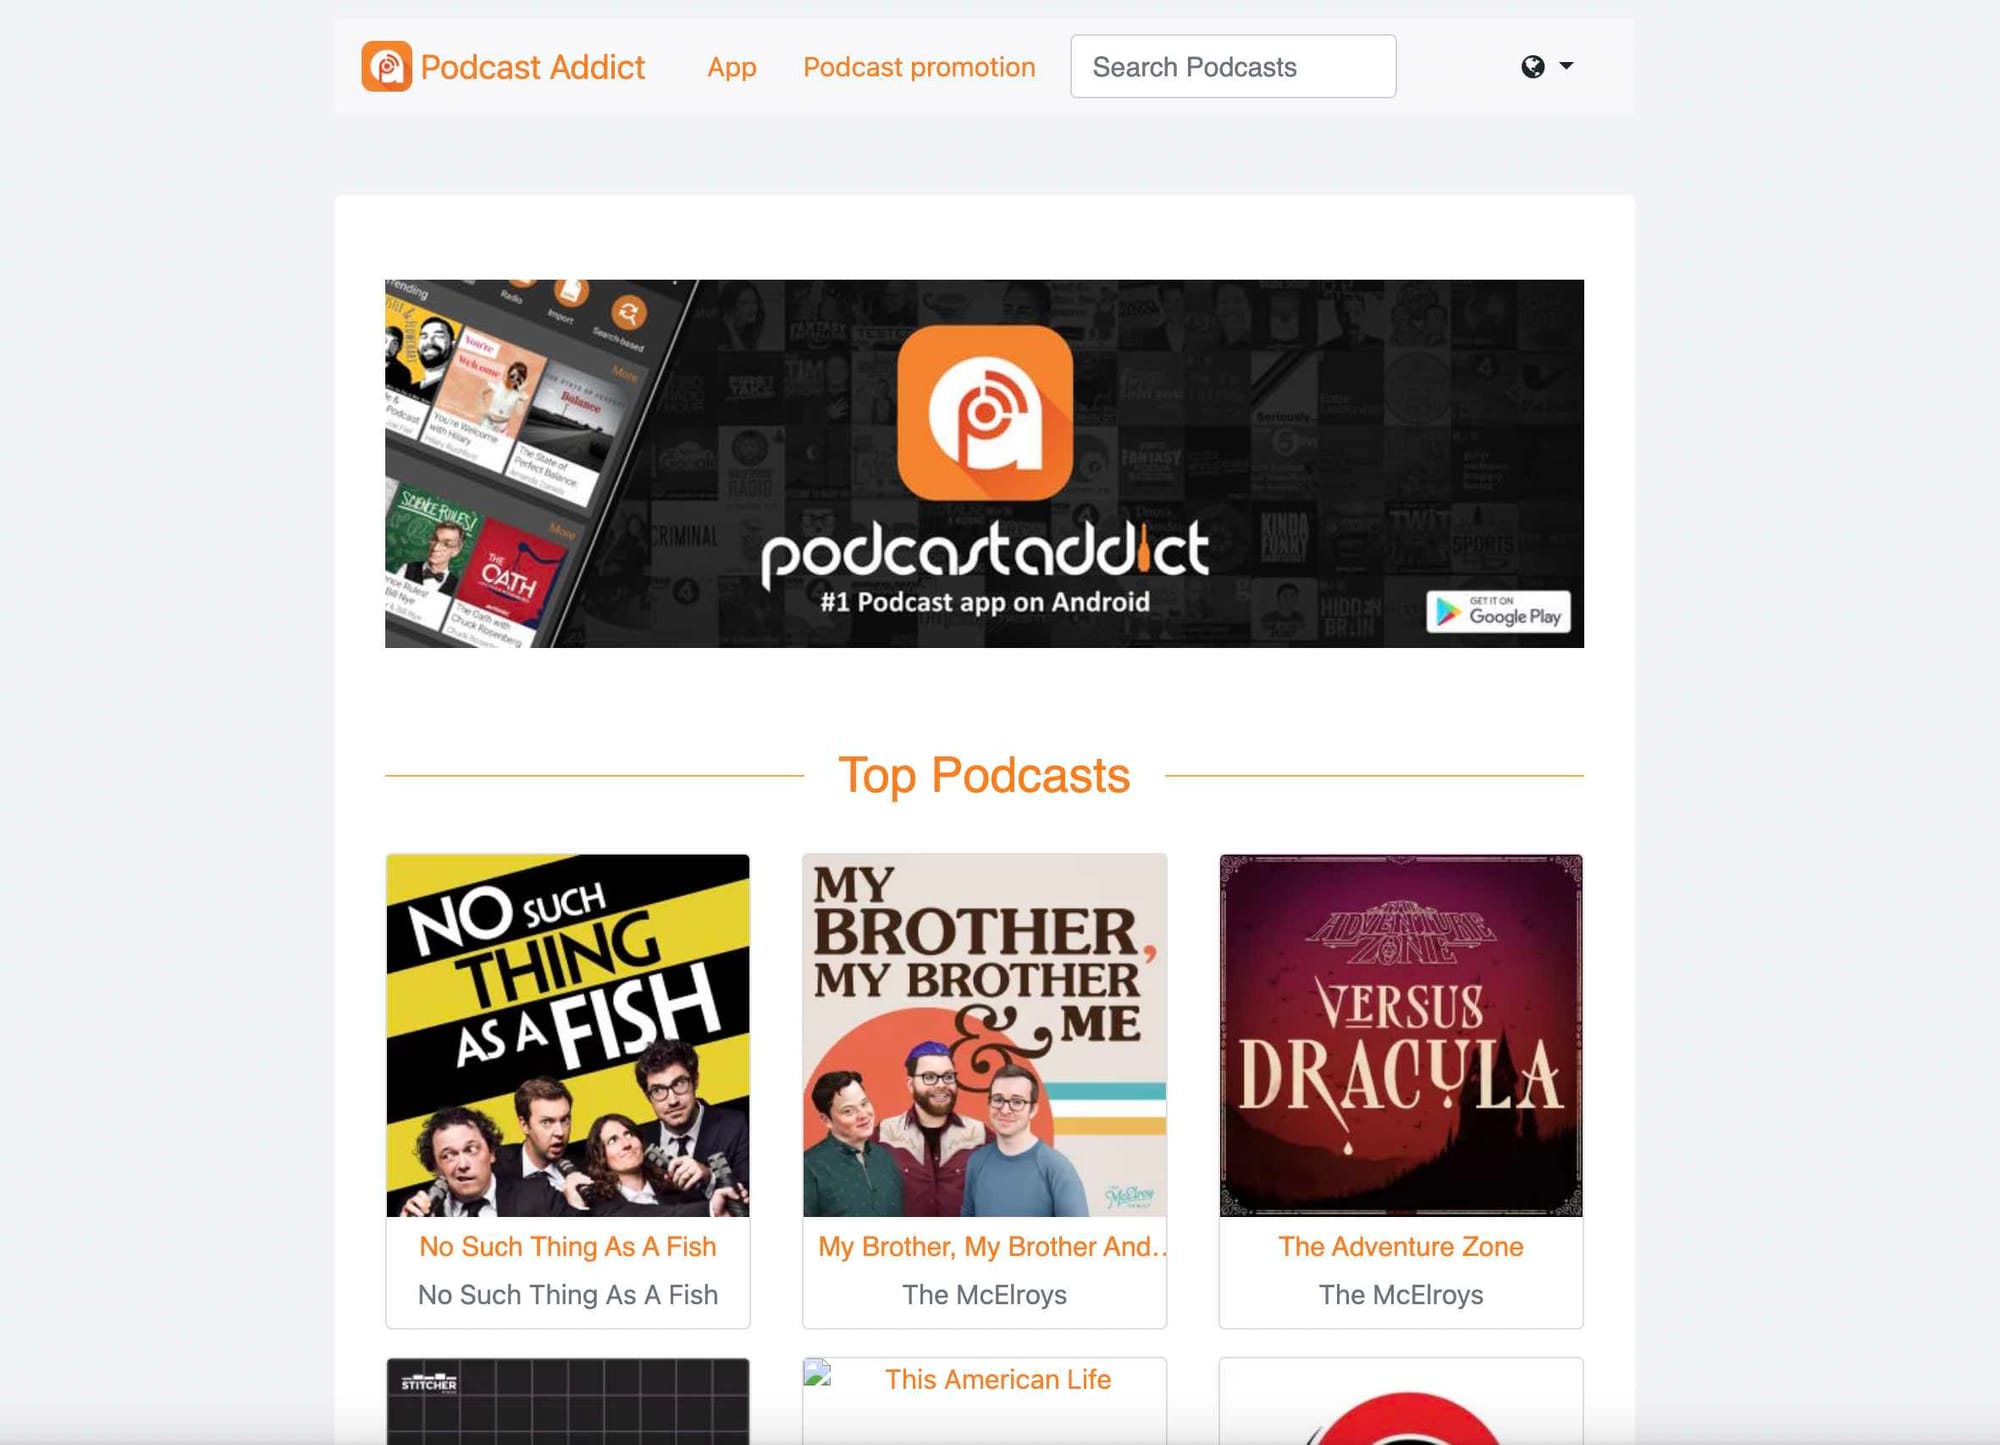 Podcast Addict's homepage